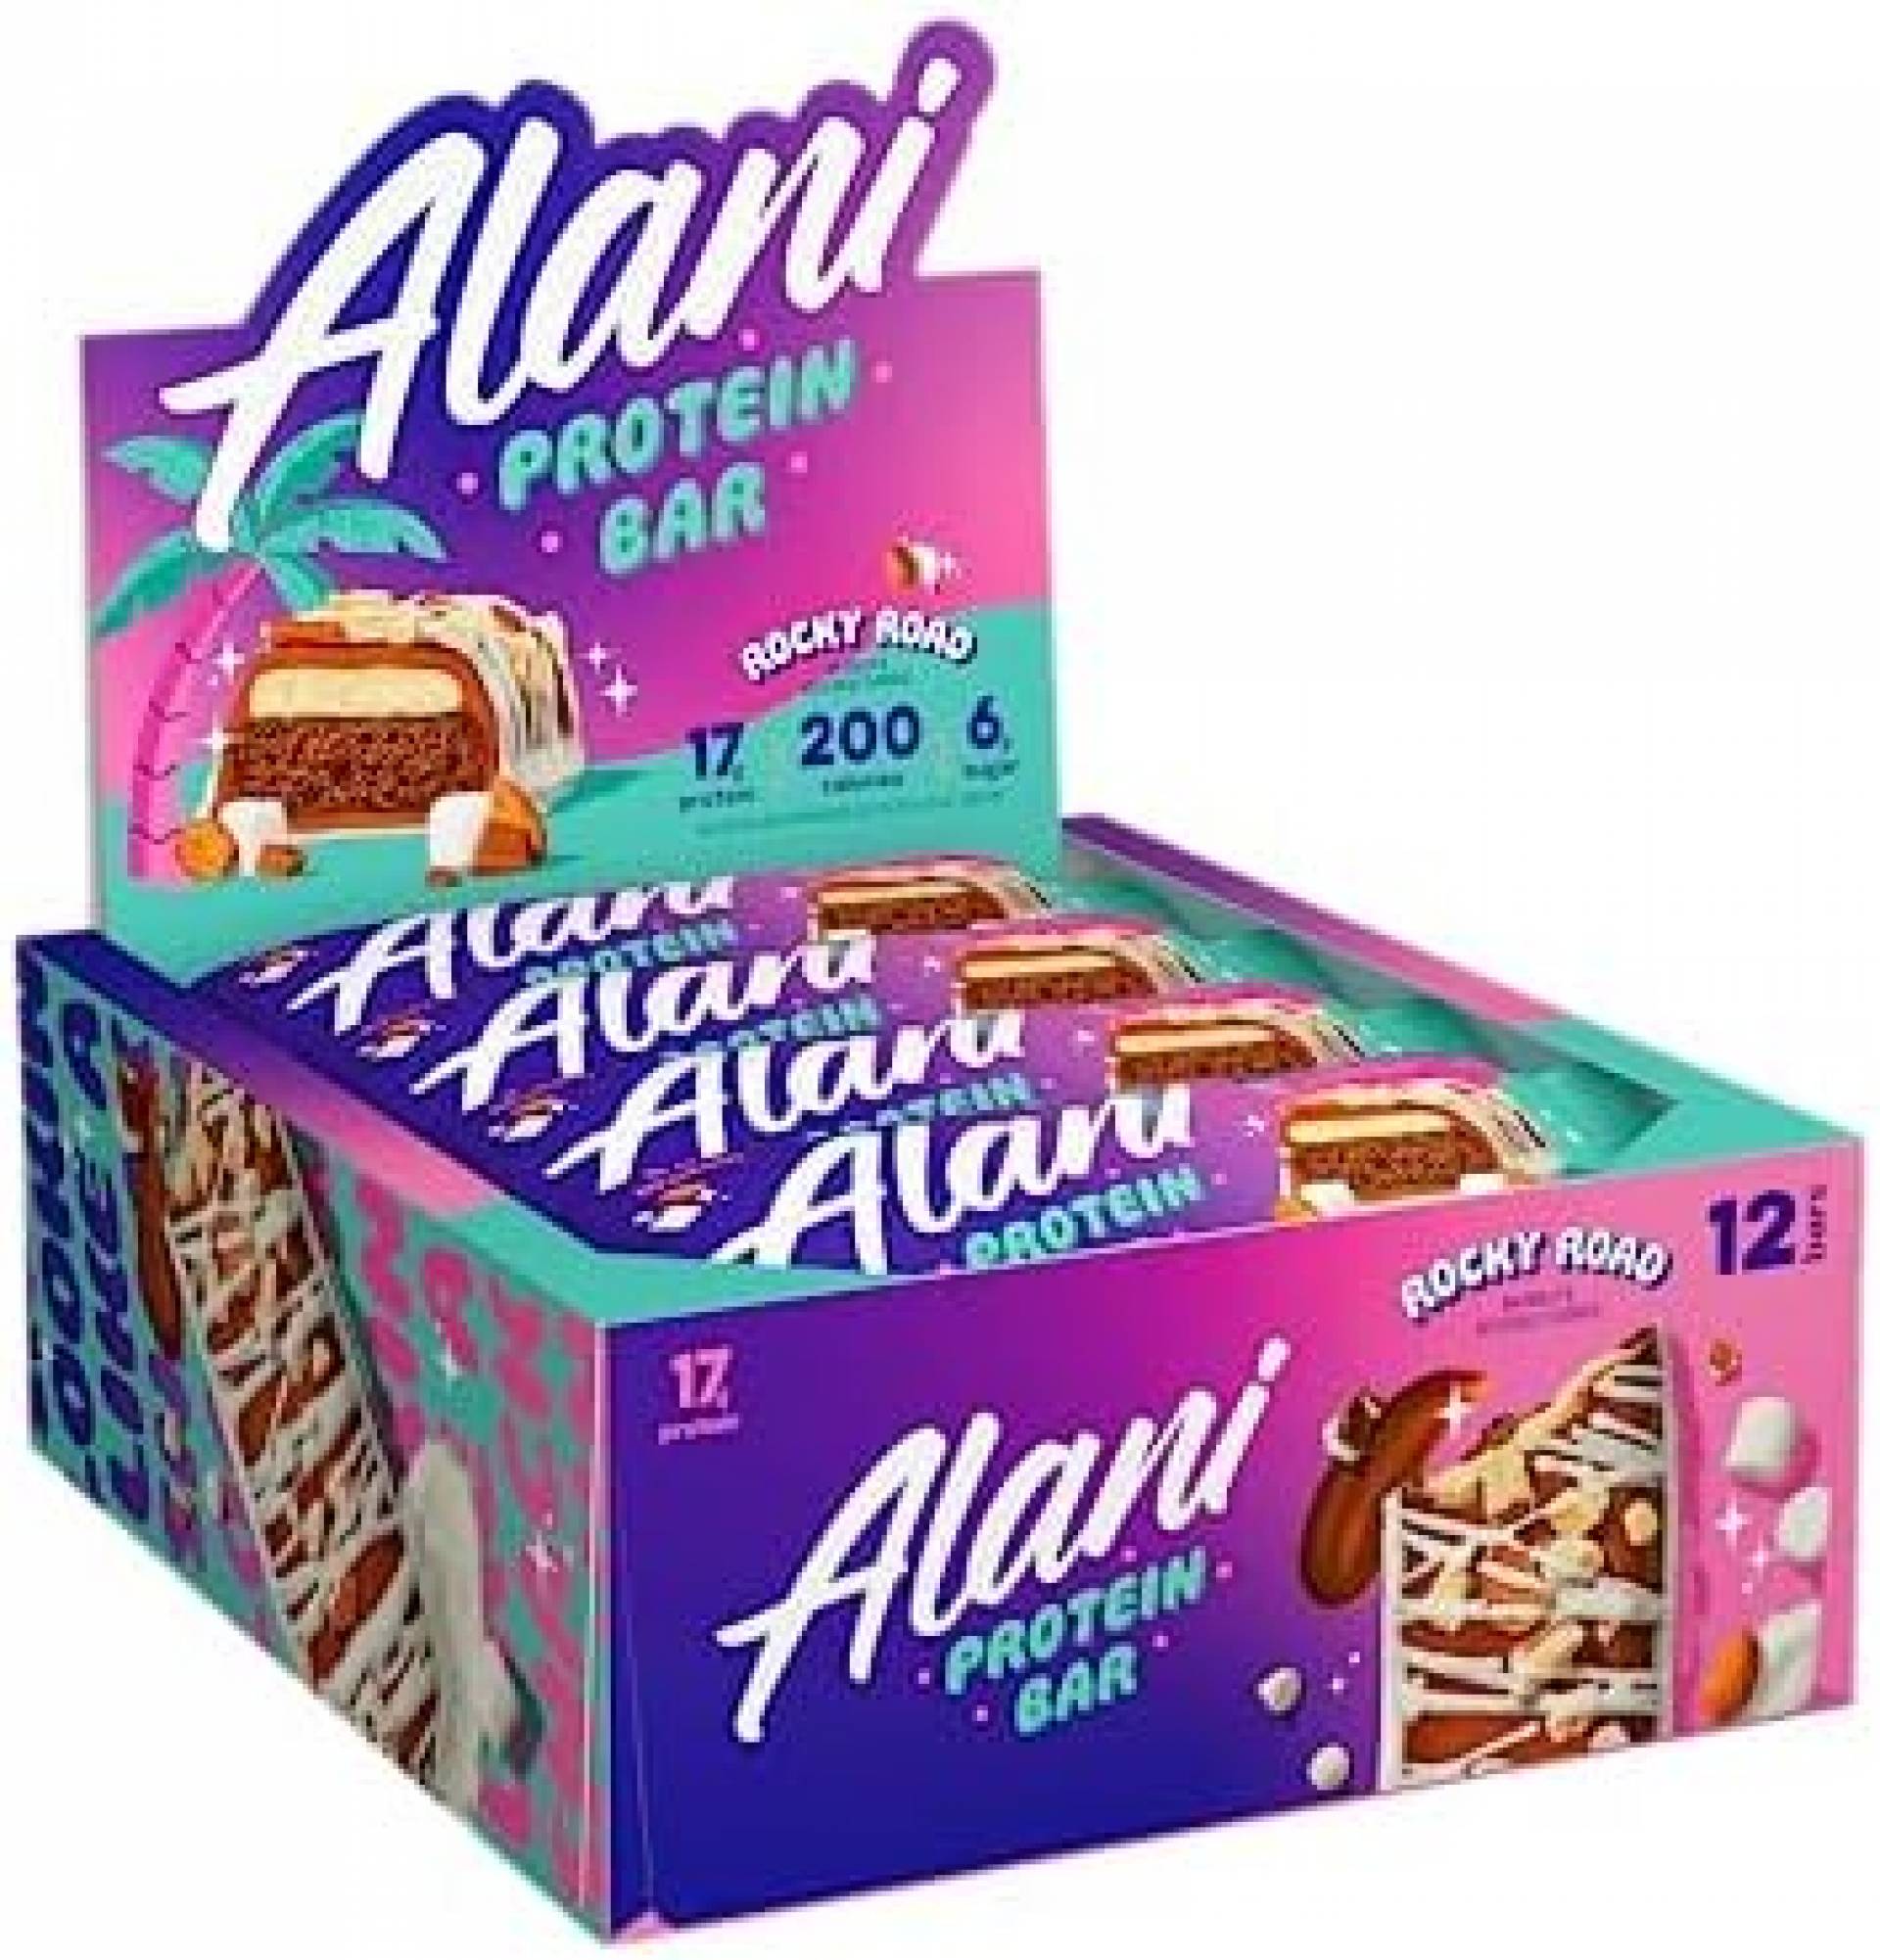 Alani Nu Protein Bars - $3.99